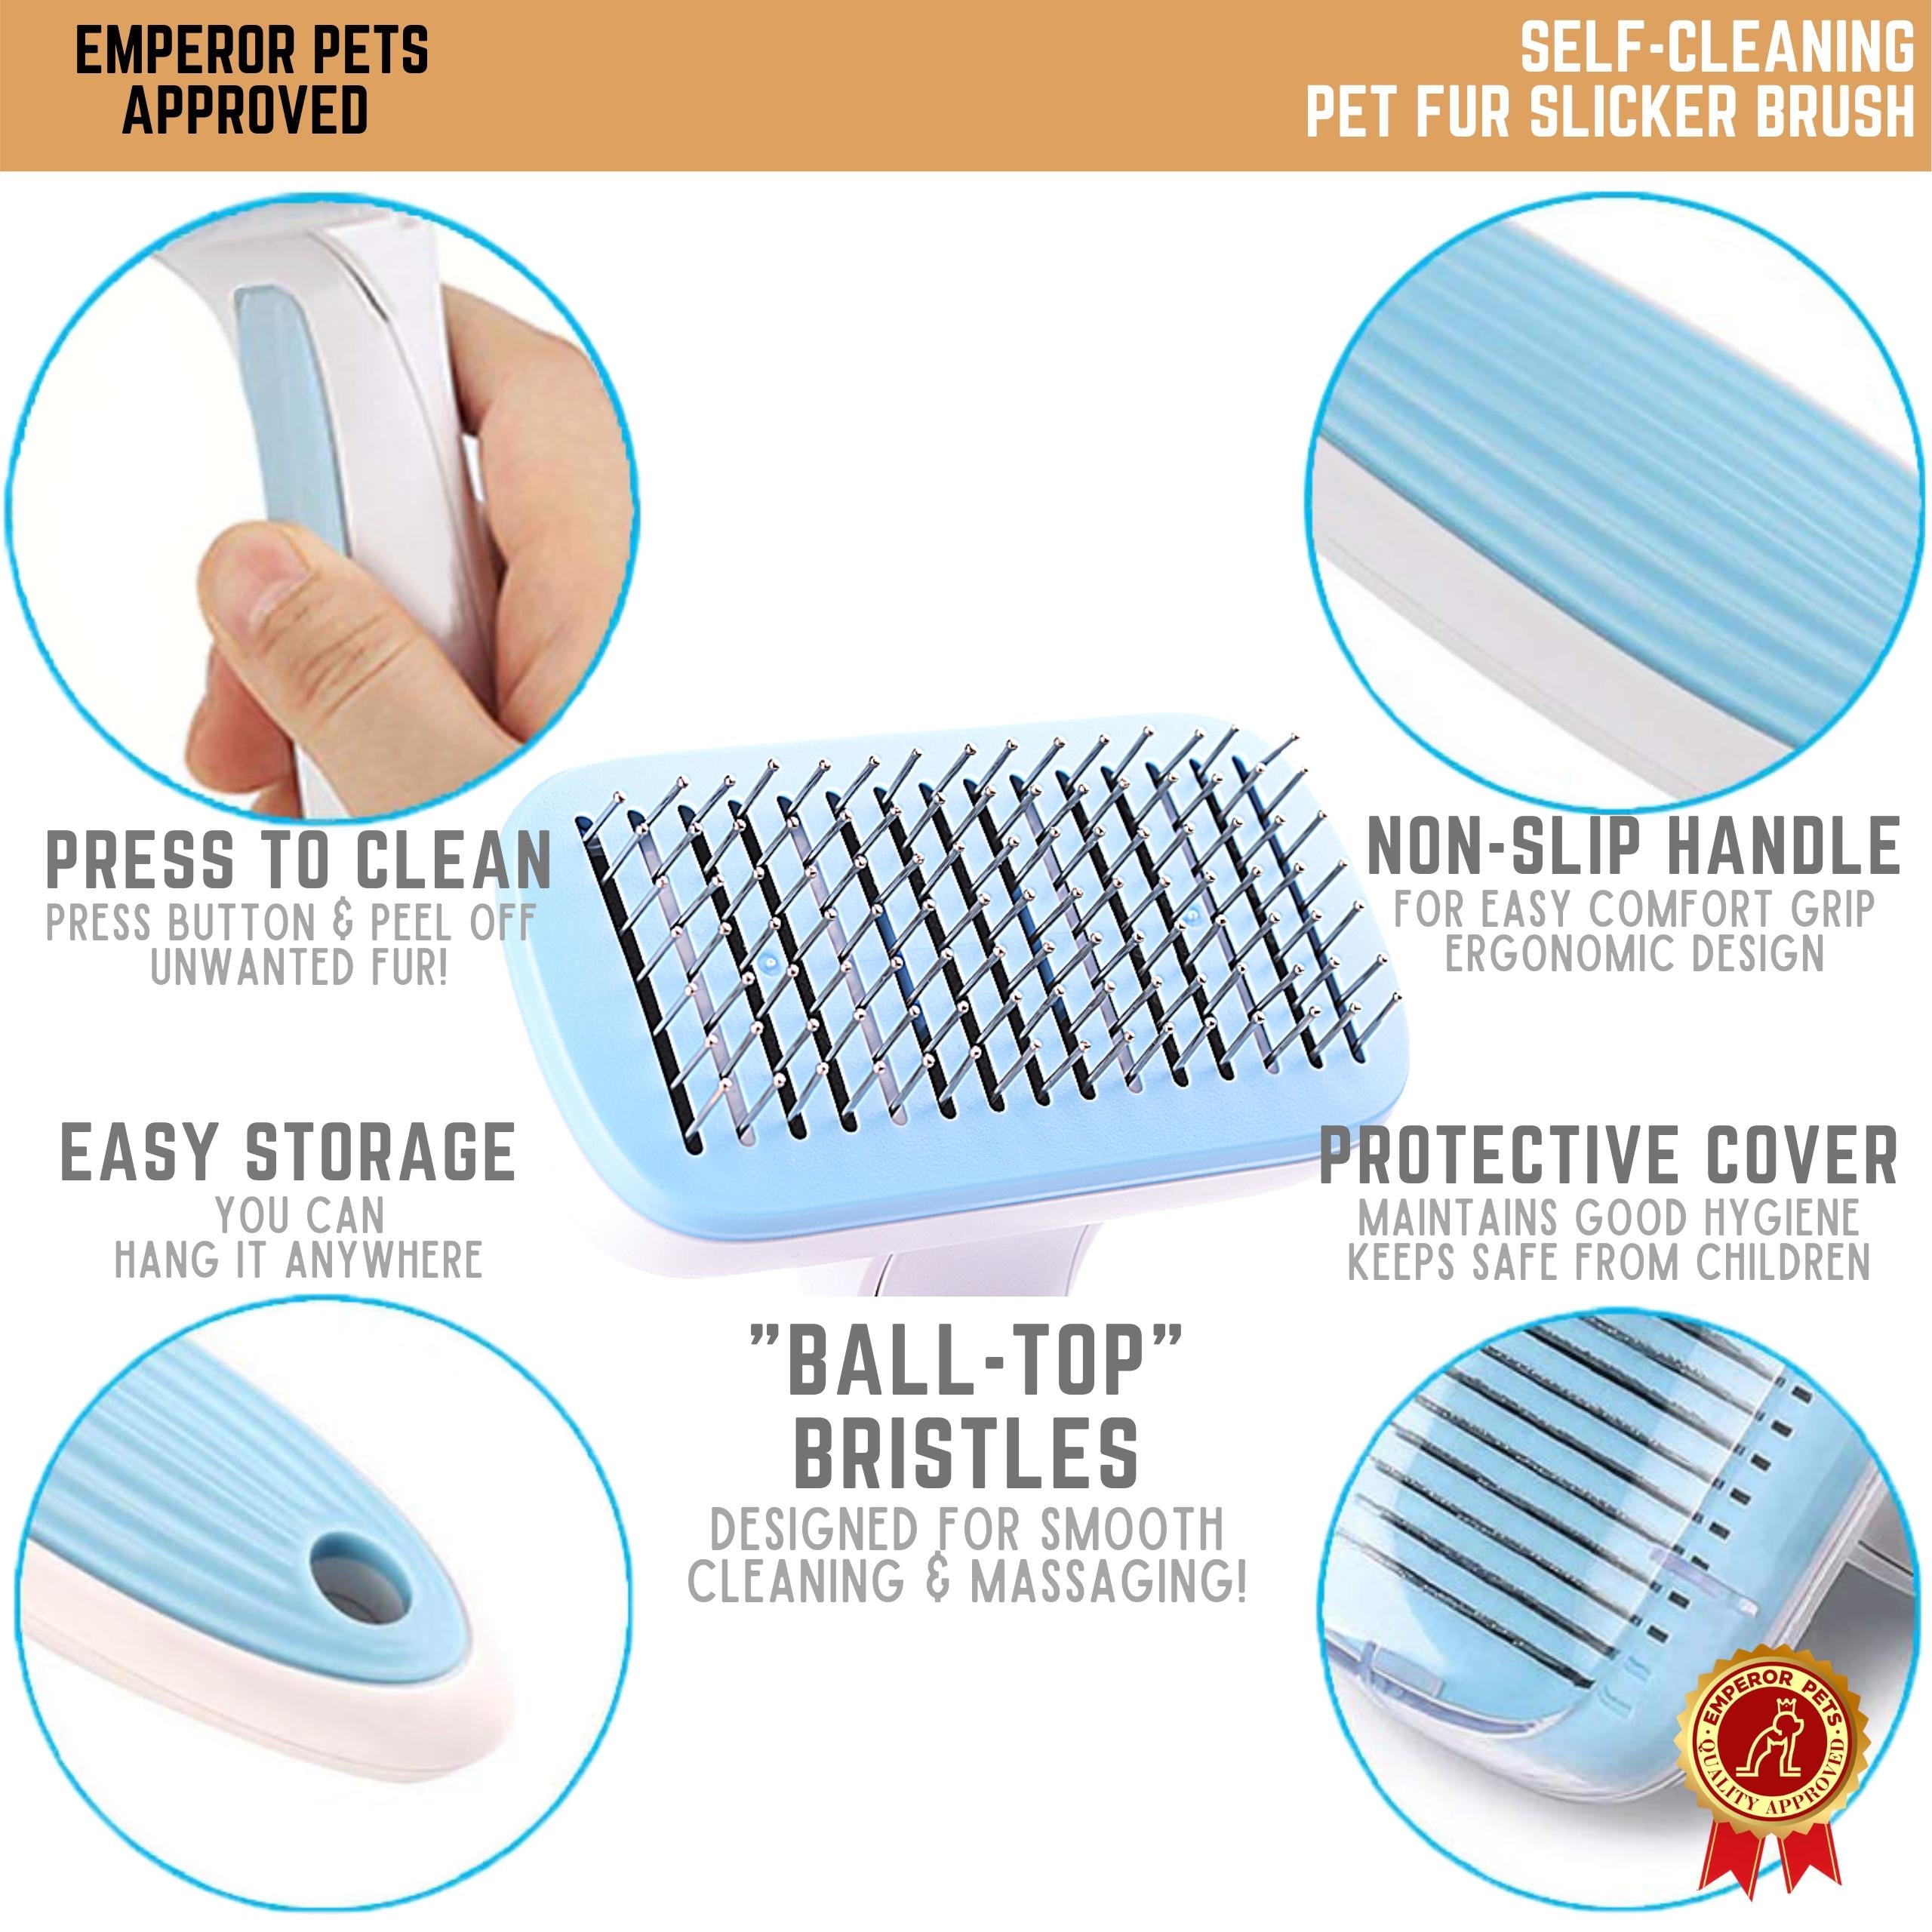 Emperor Pets Self Cleaning Pet Fur Slicker Brush for Short Fur Pets, Dog Brush, Cat Brush, Blue Color - Image 3 Key Features